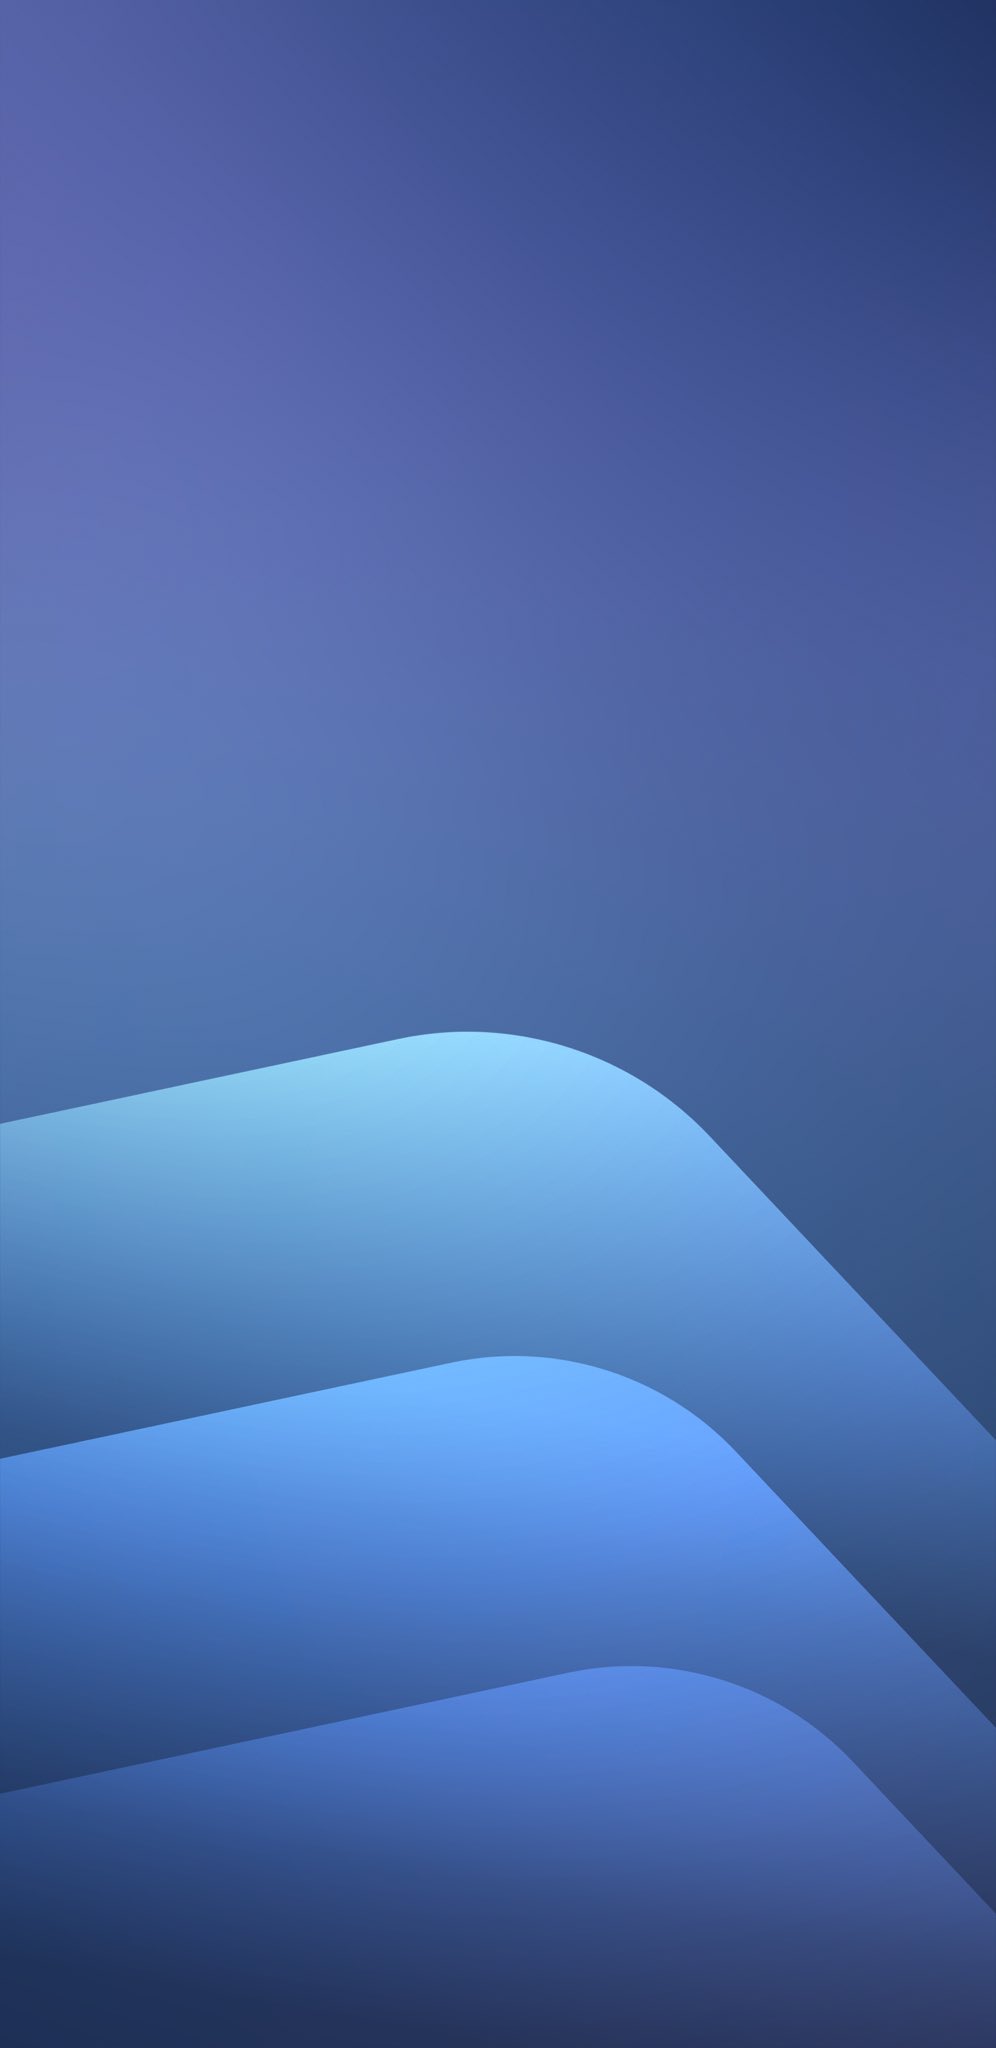 Pacific Blue iphone wallpaper idownloadblog smartechdaily geometric